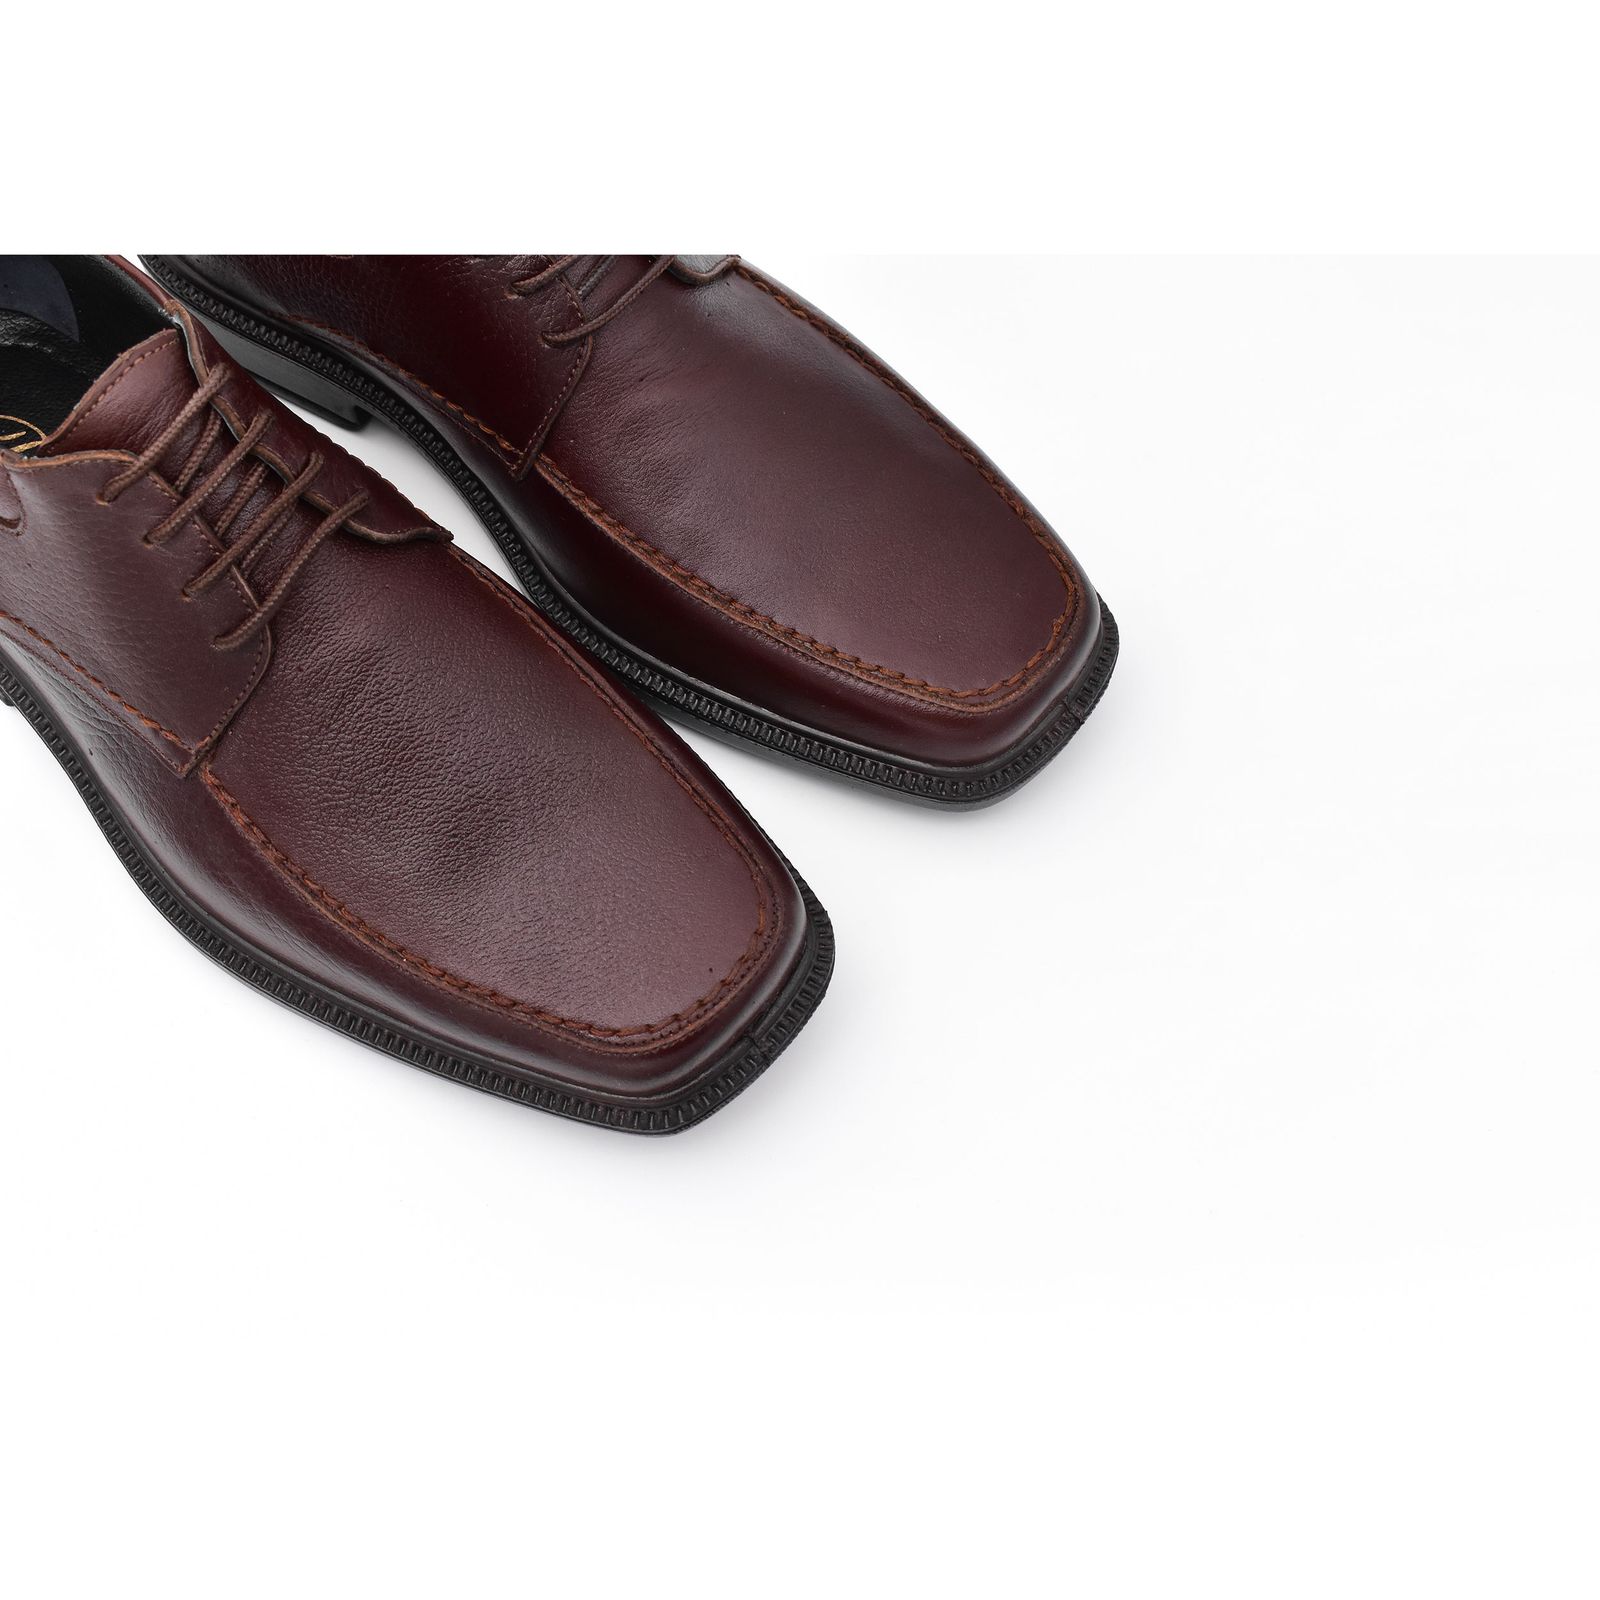 کفش مردانه پاما مدل Oscar کد G1182 -  - 3